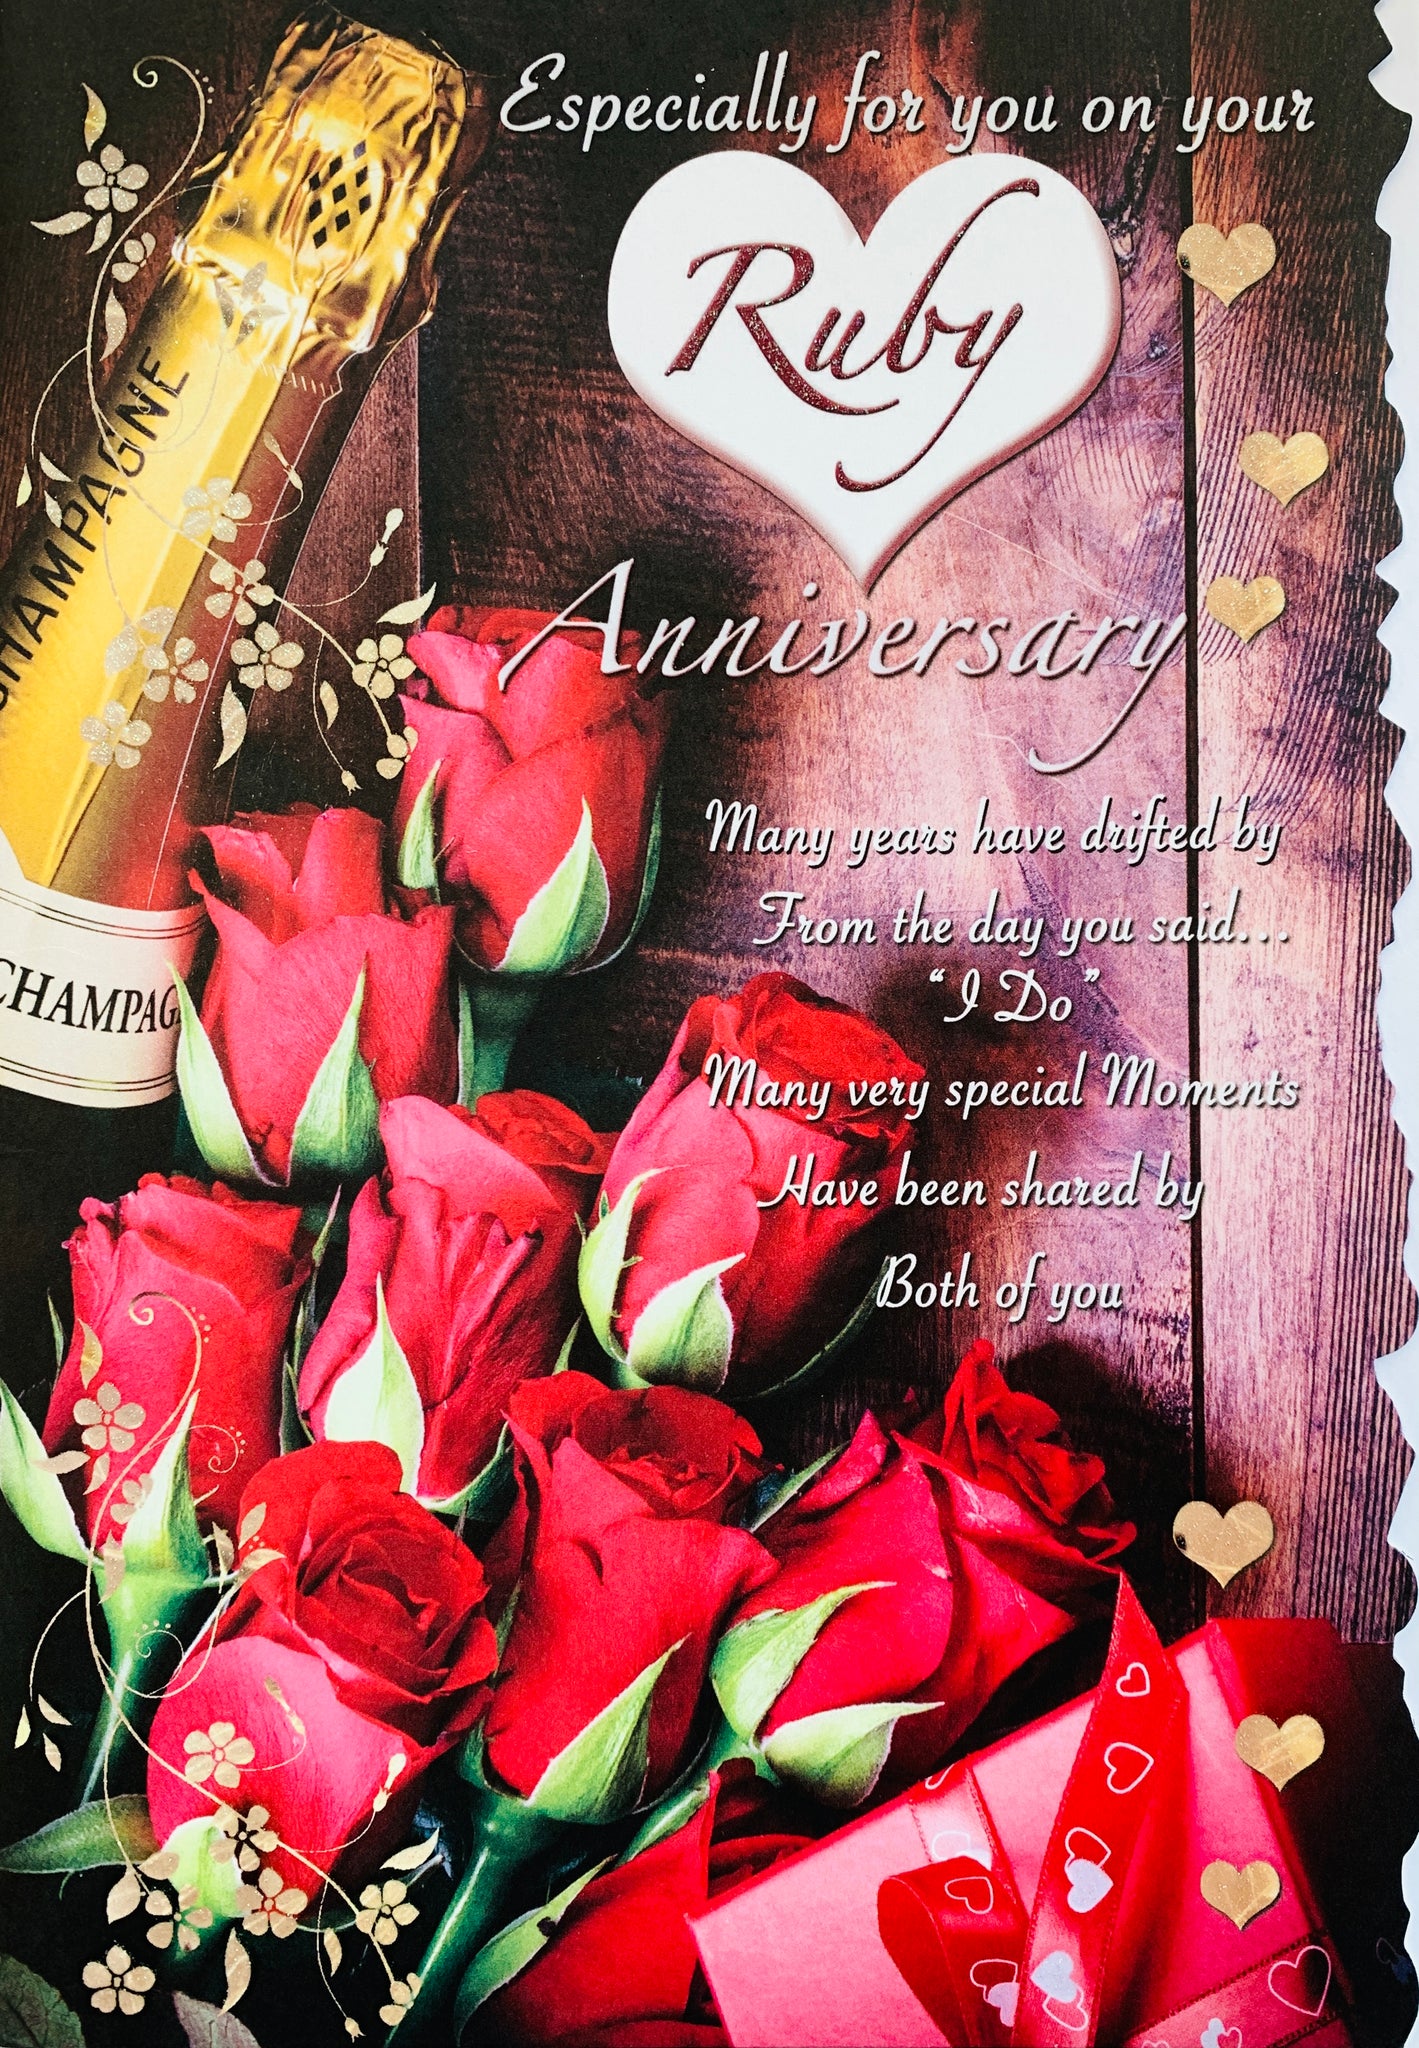 Ruby anniversary card - sentimental verse